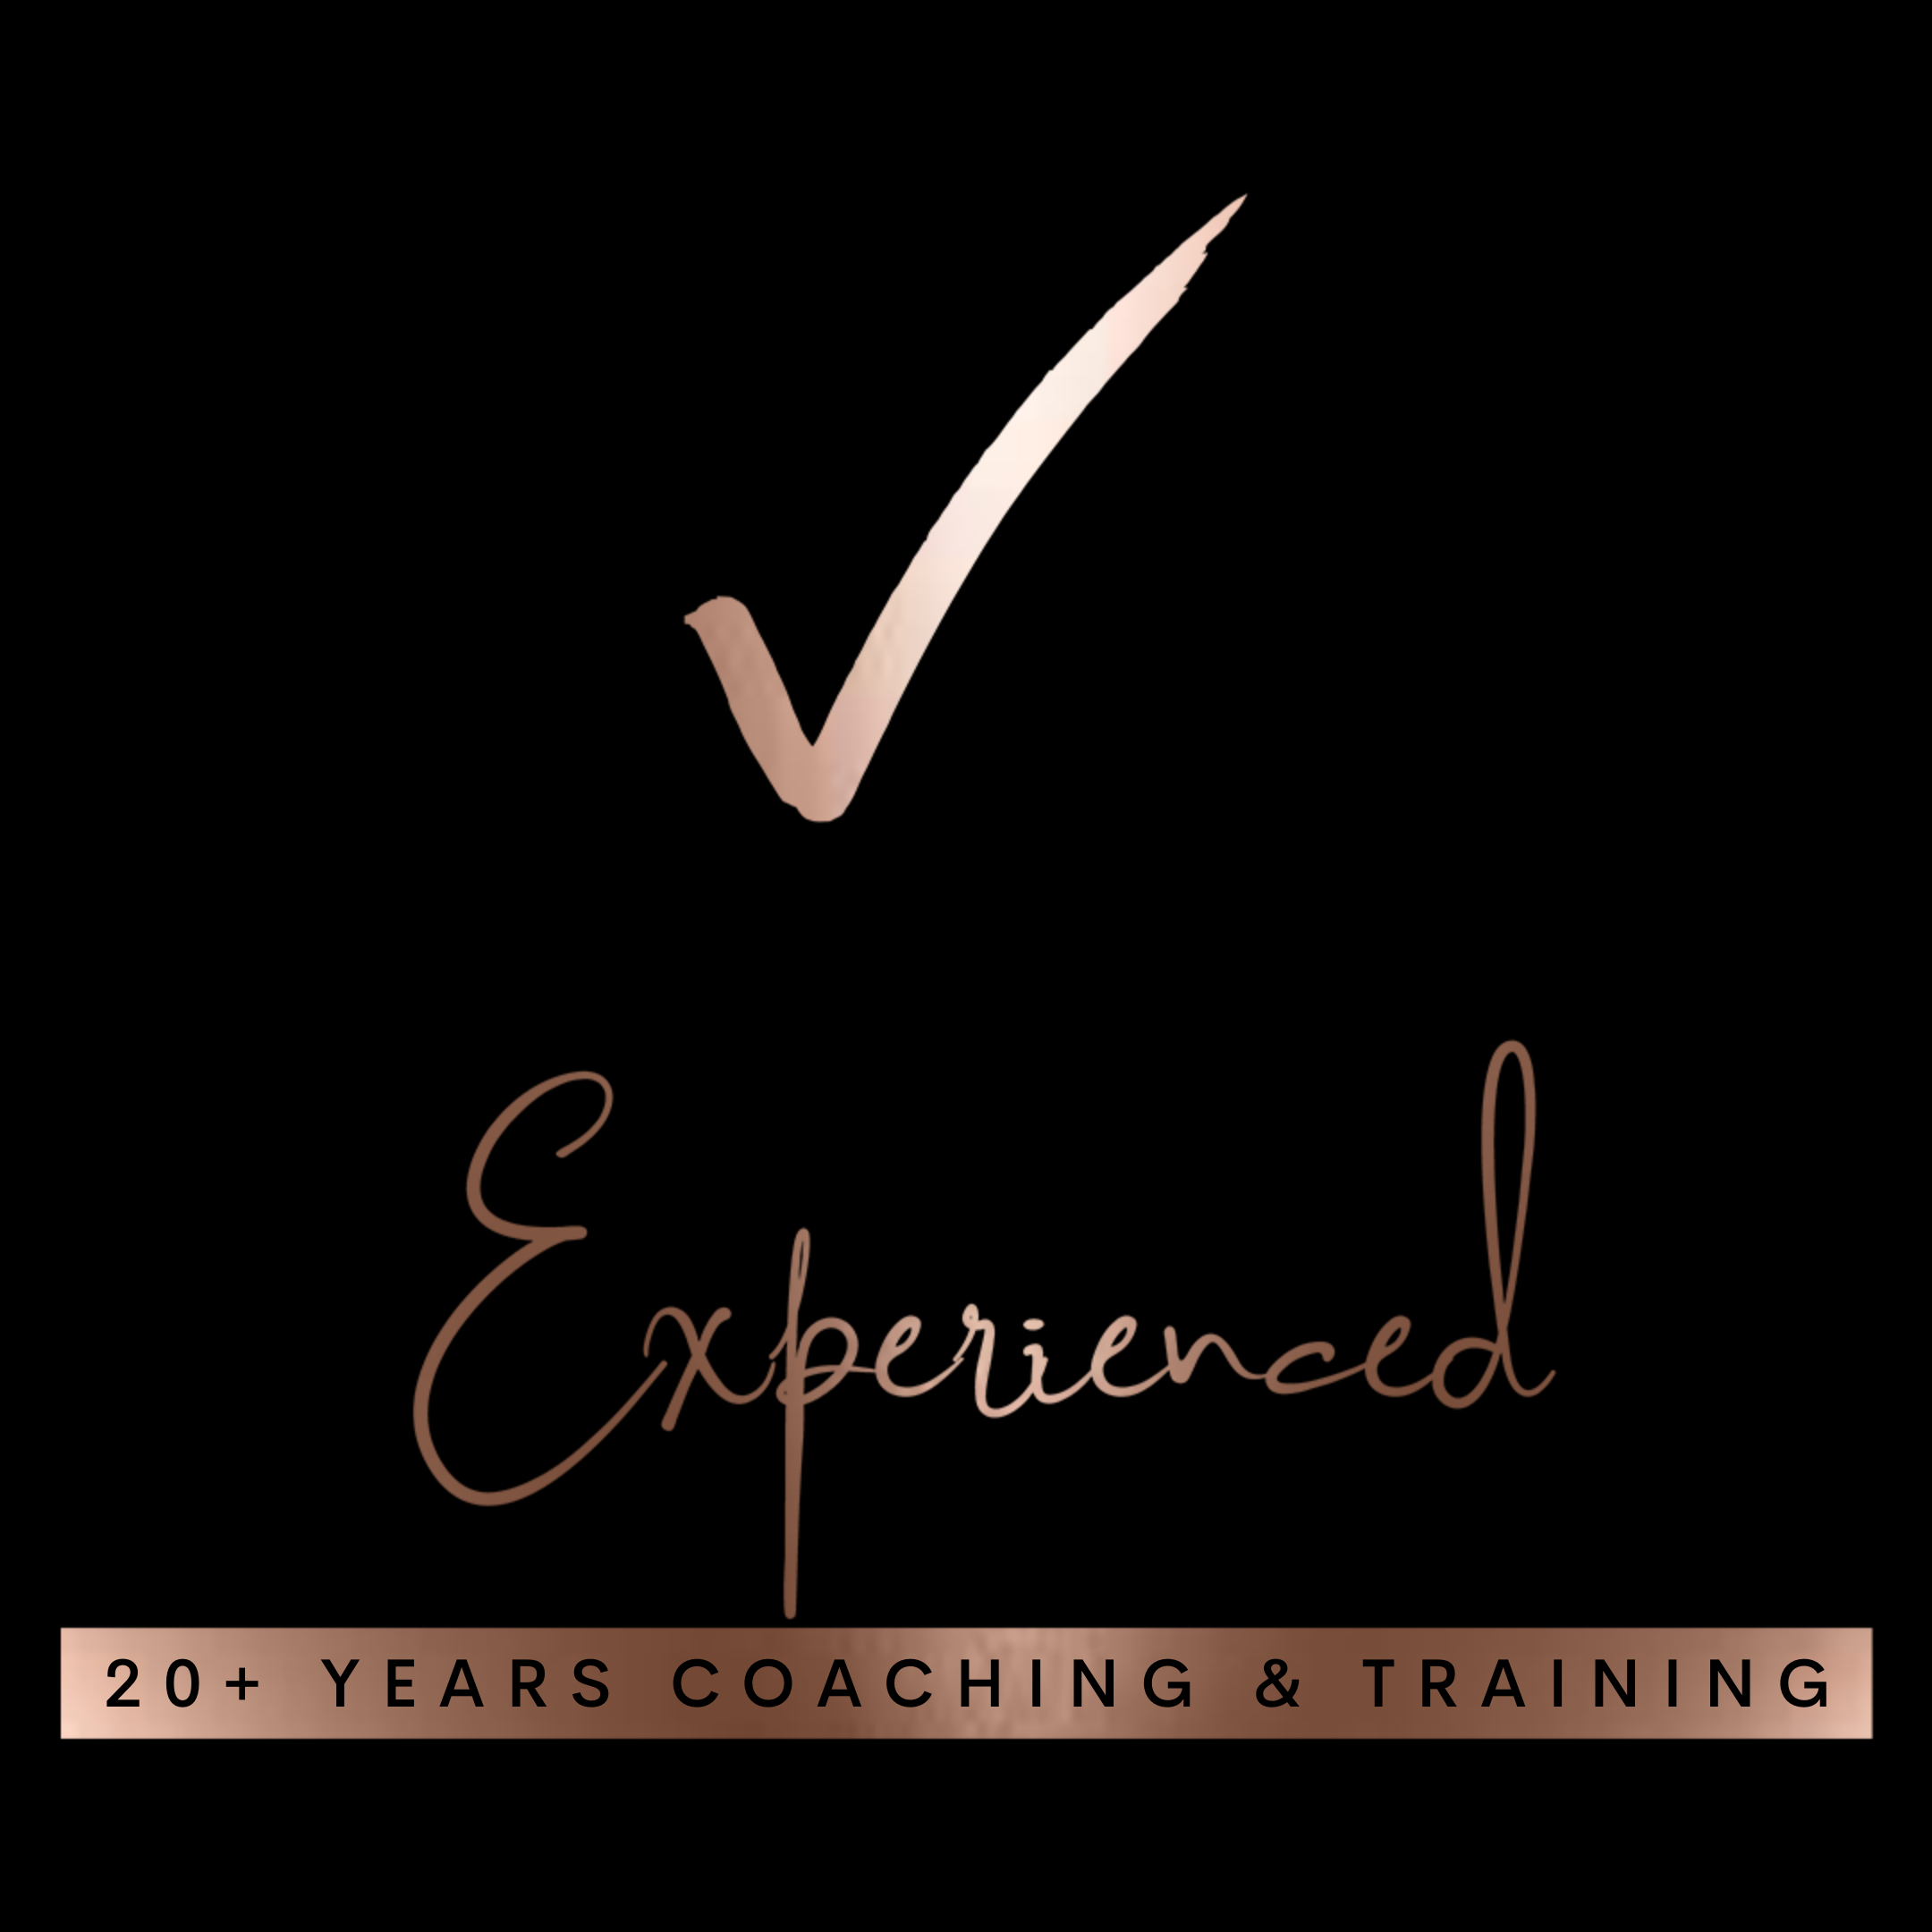 20+ years coaching & training experience